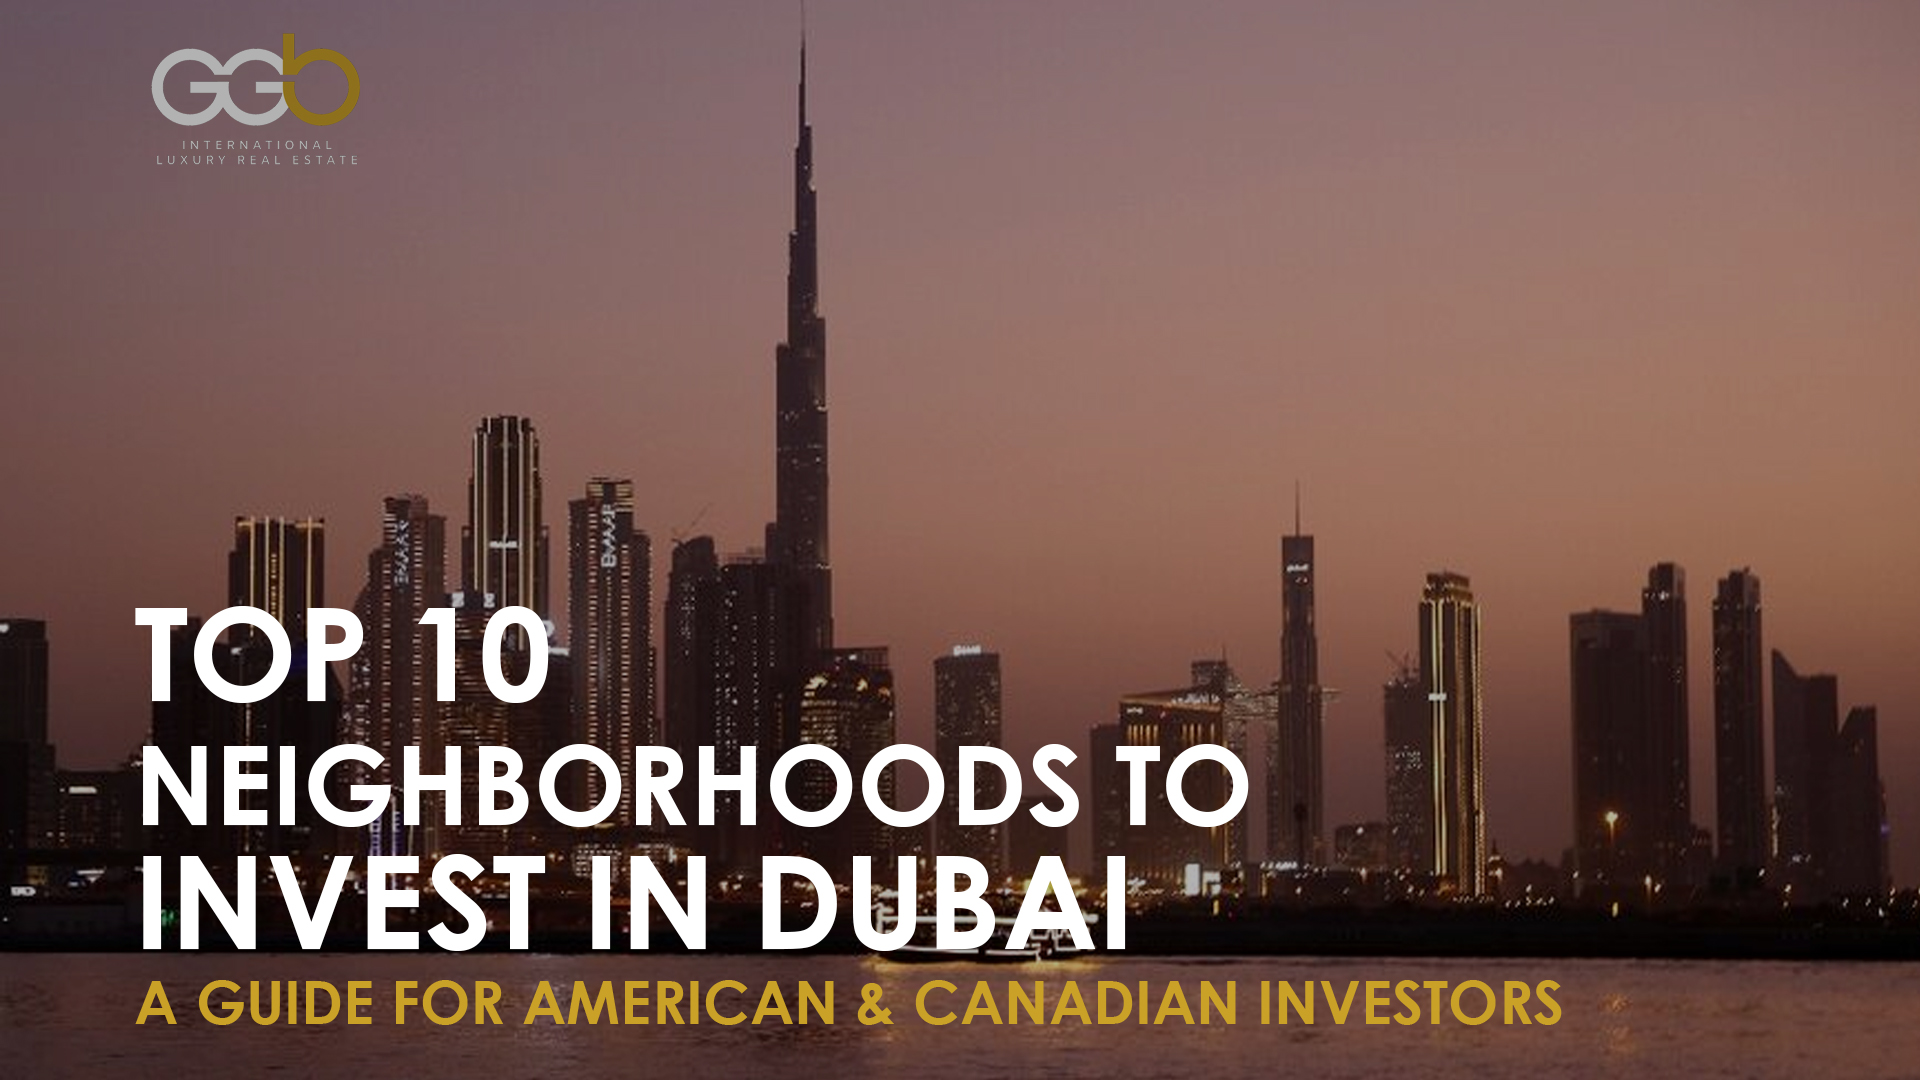 Unlocking Investment Opportunities: Dubai Creek Harbour – Dubai’s New Downtown